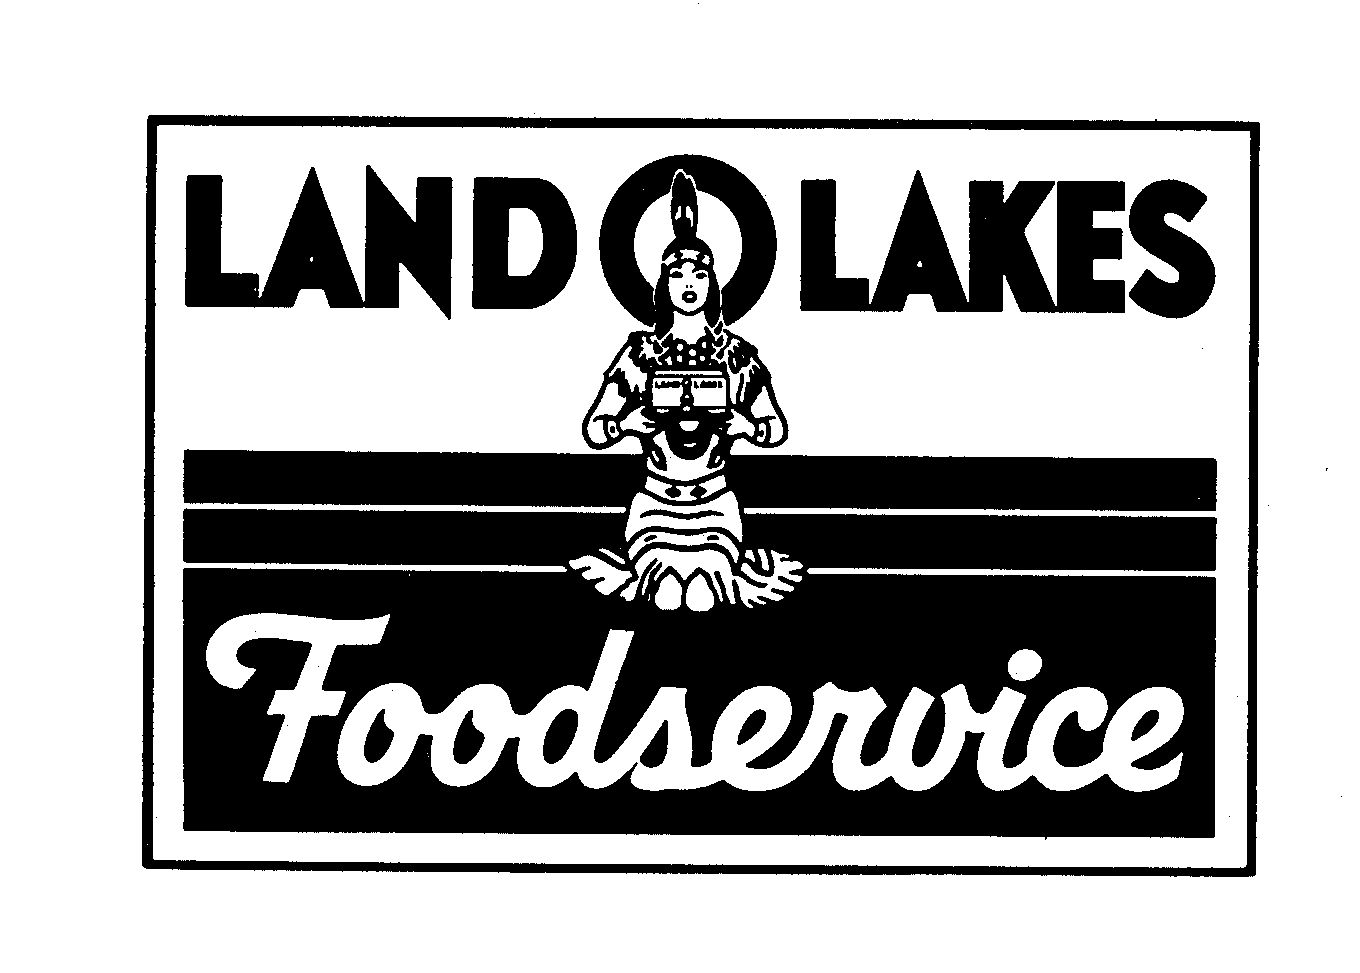  LAND O LAKES FOODSERVICE